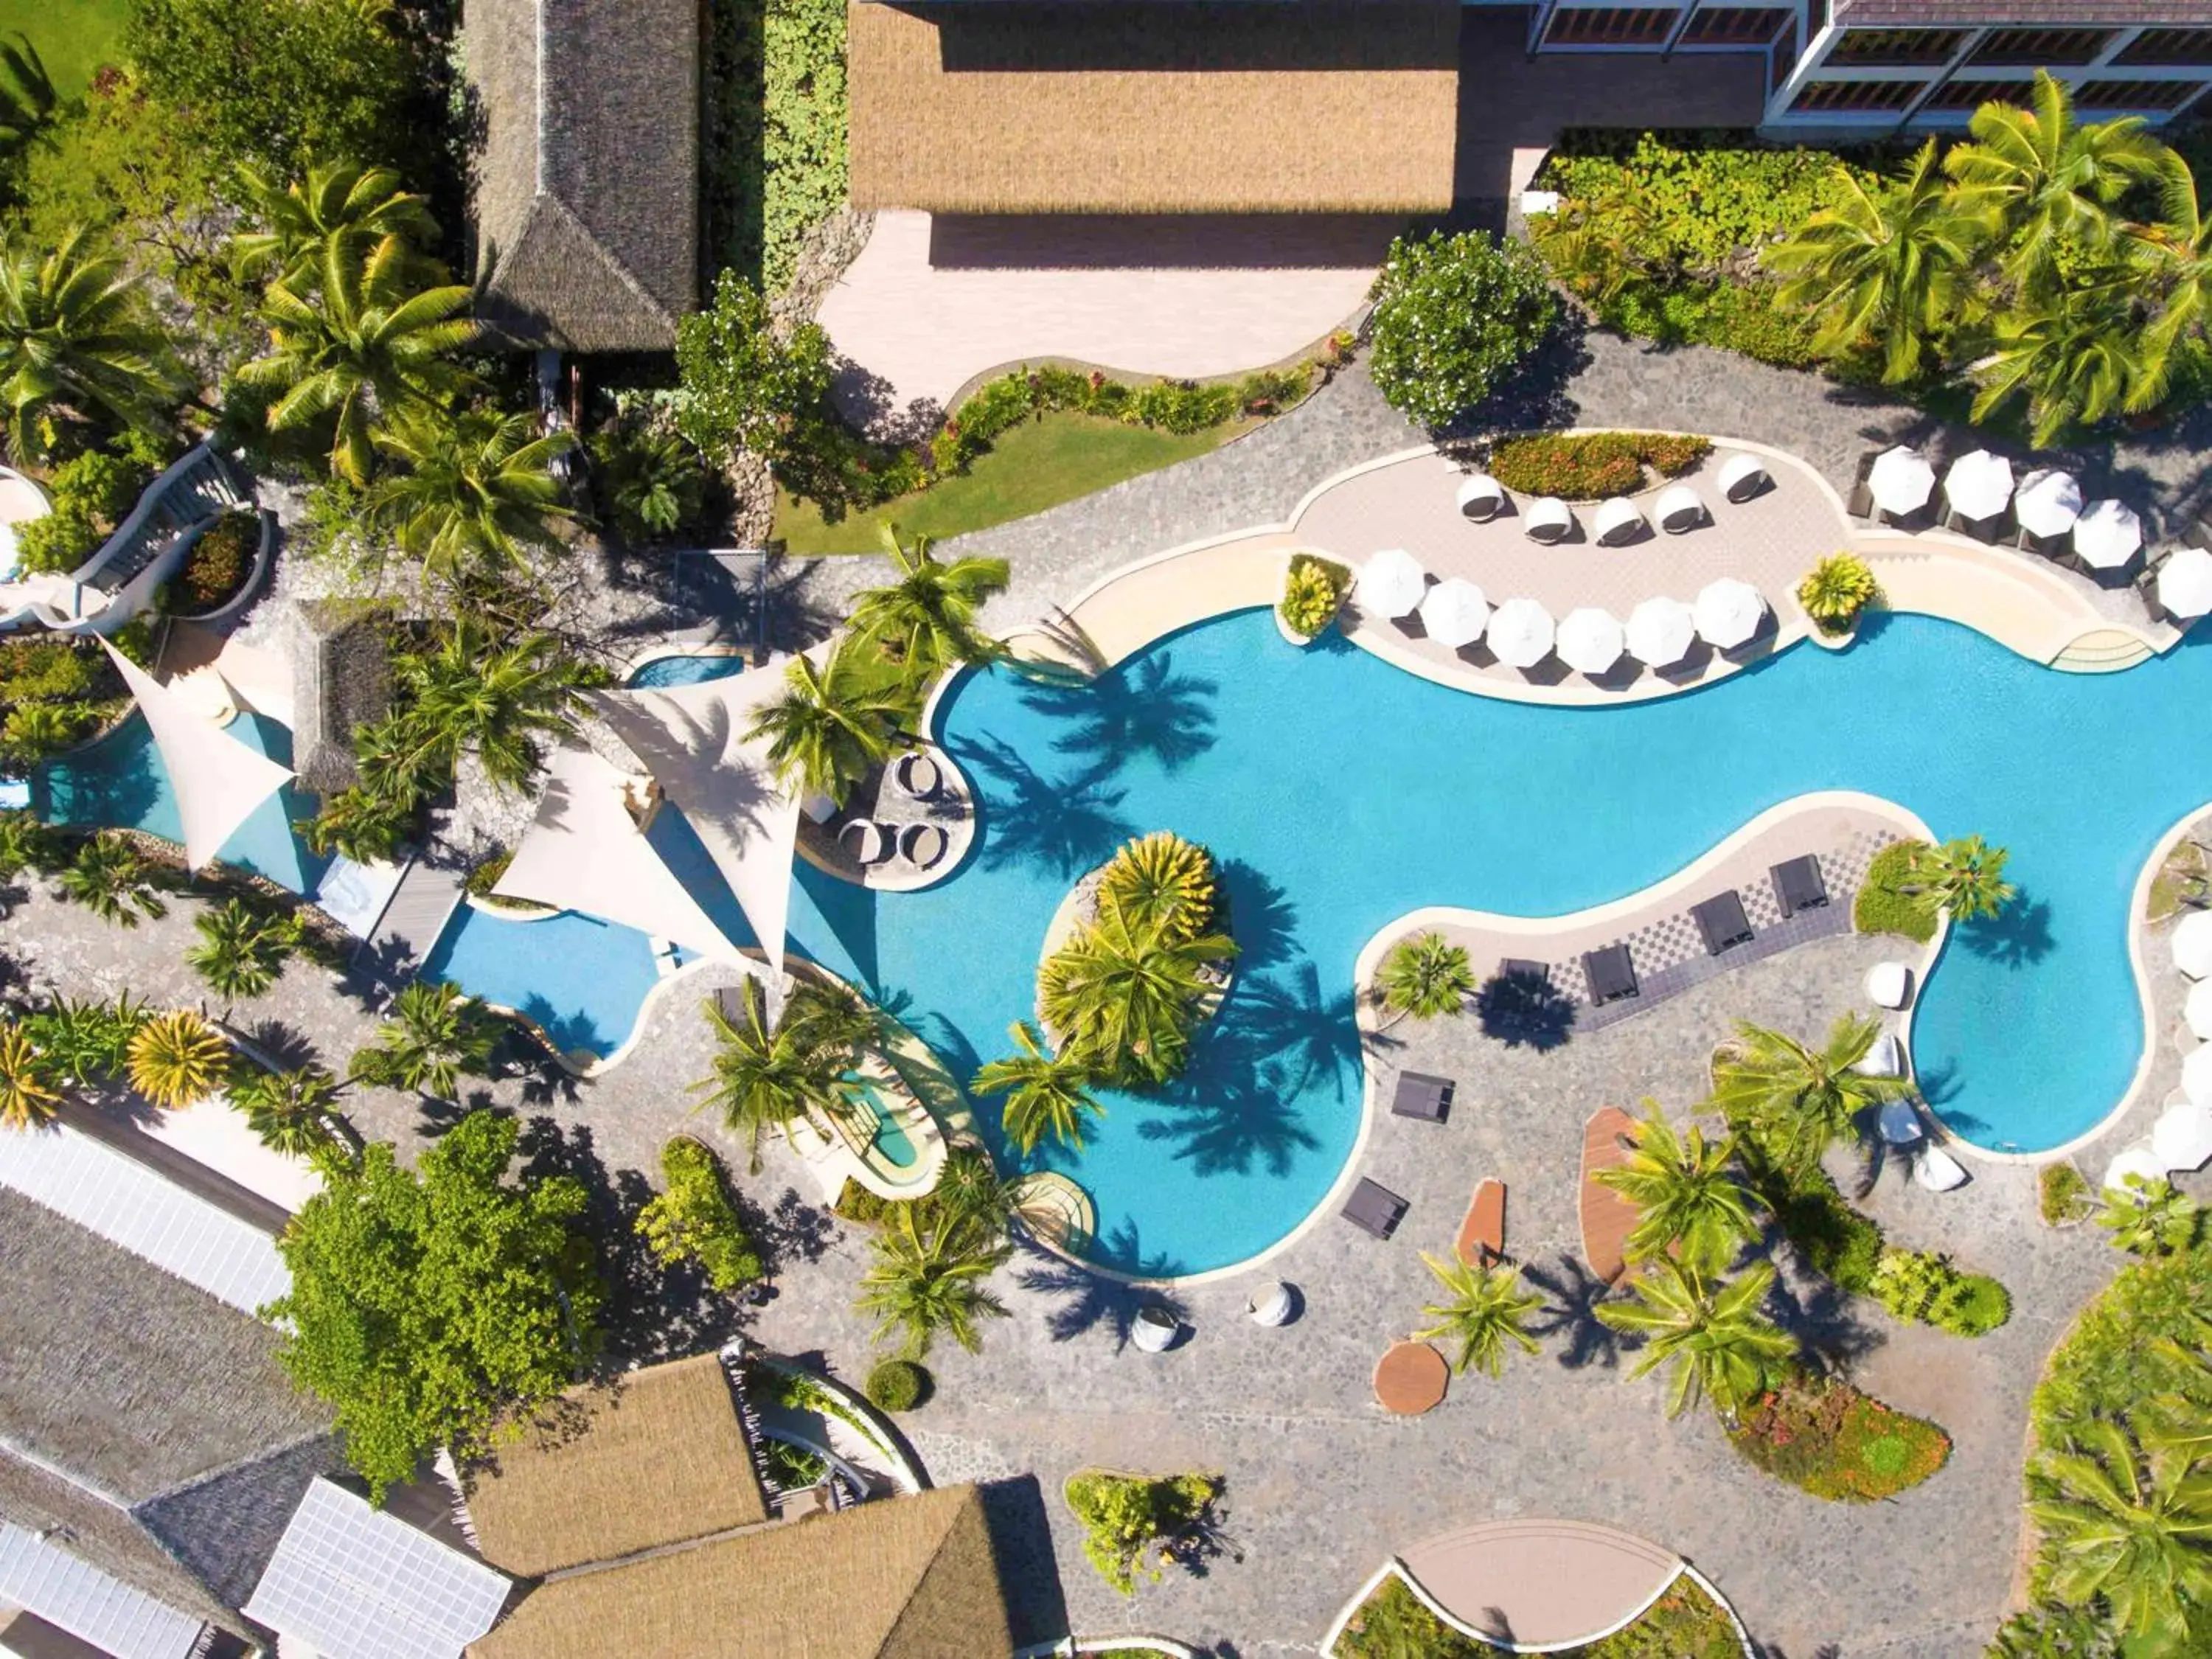 On site, Pool View in Sofitel Fiji Resort & Spa